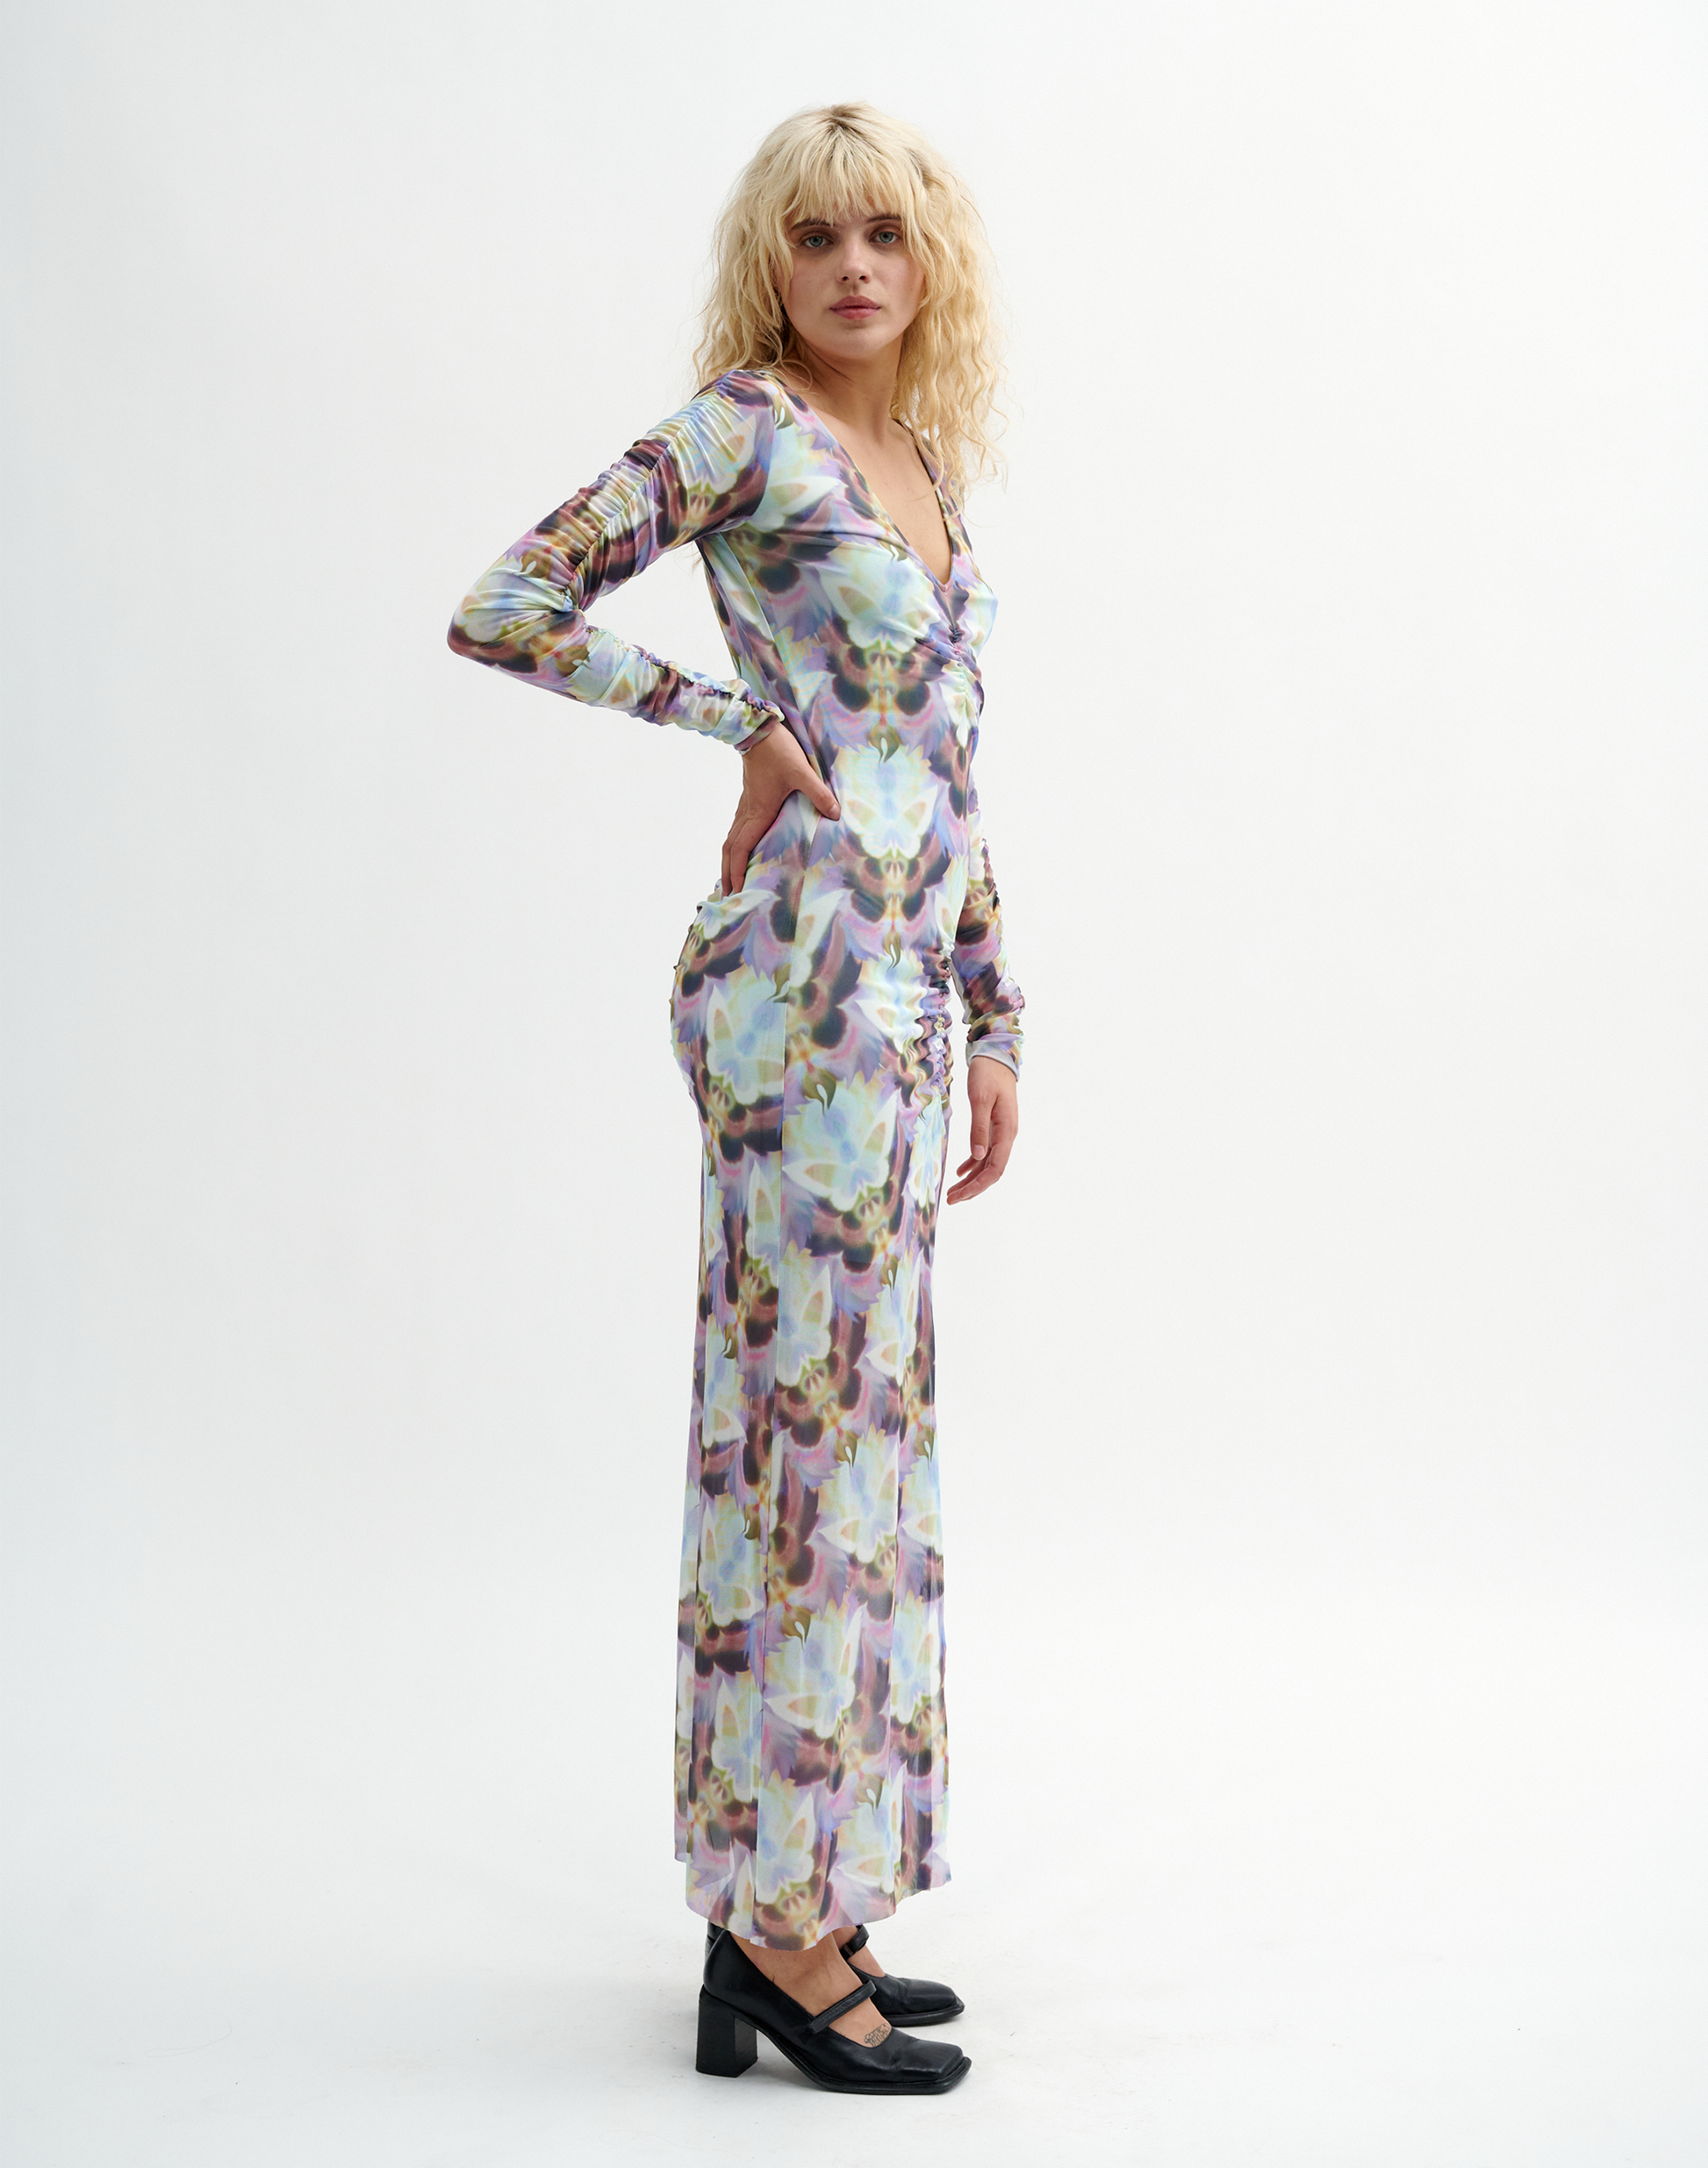 RESUME Althea Kleid in Multi Colour, Tragebild Seite